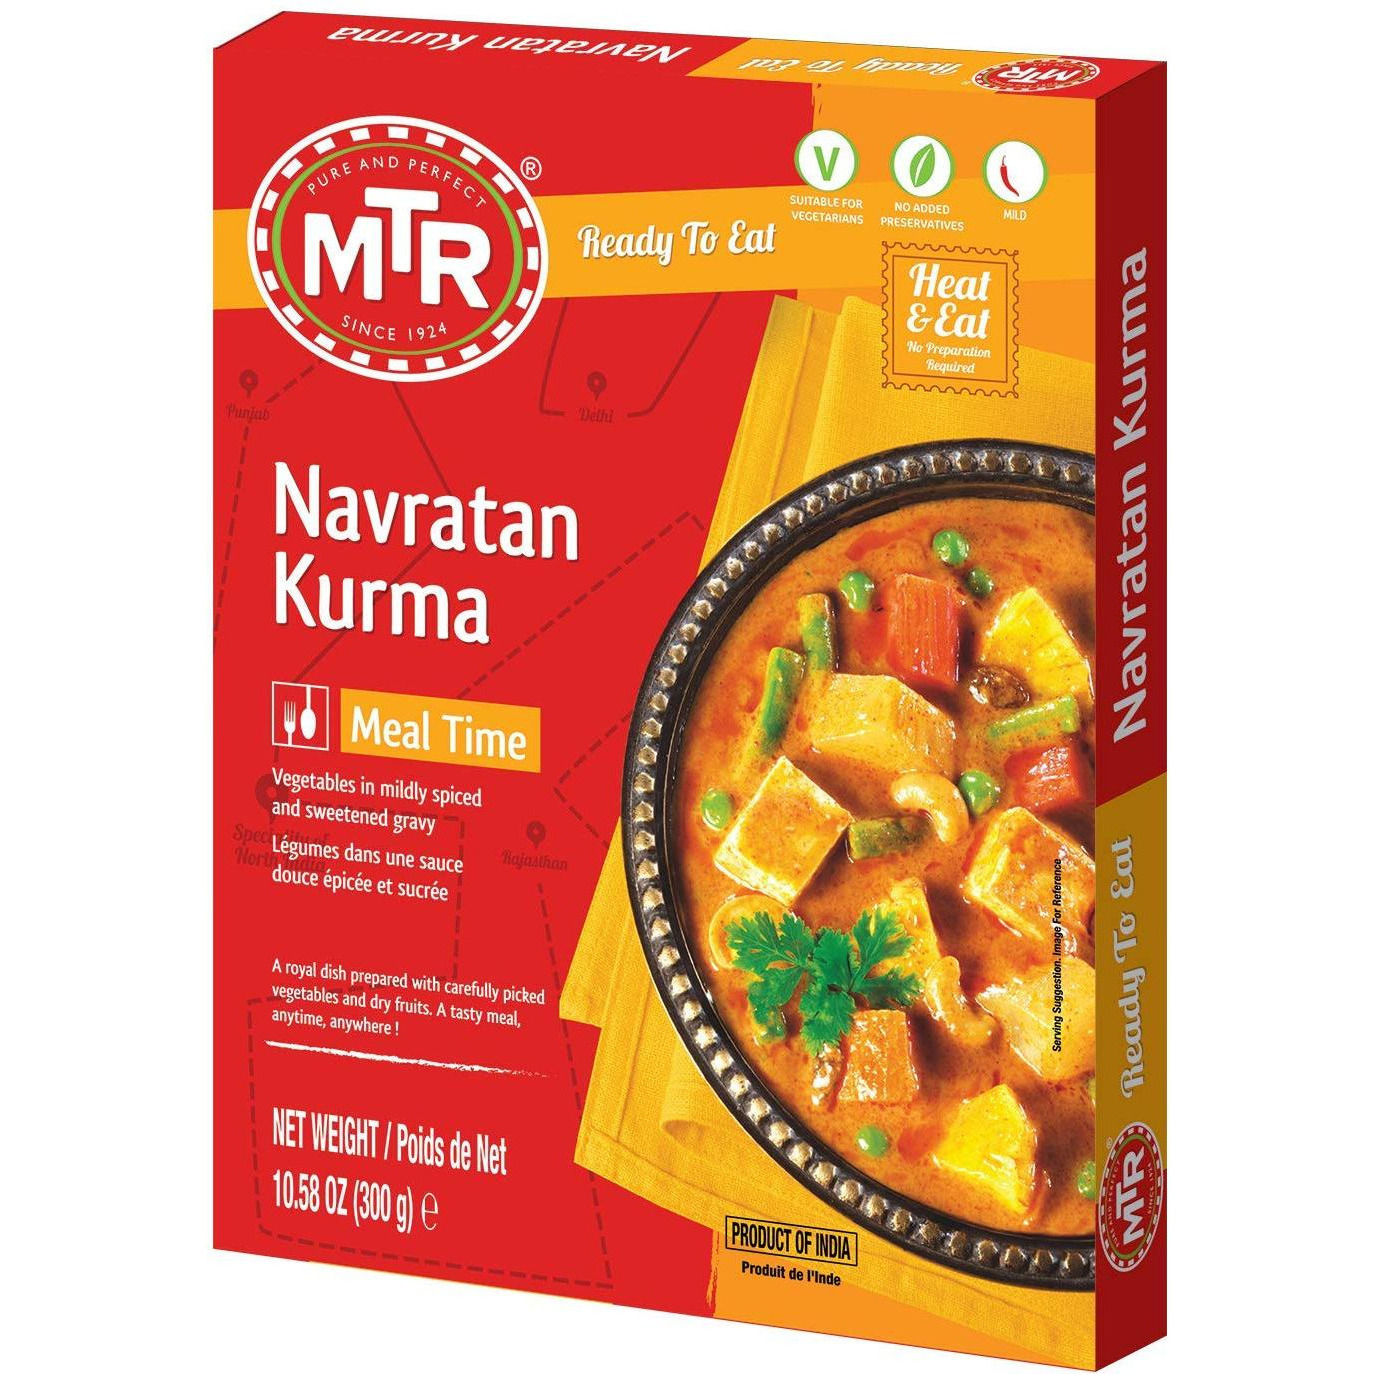 Pack of 3 - Mtr Ready To Eat Navratan Kurma - 300 Gm (10.58 Oz)